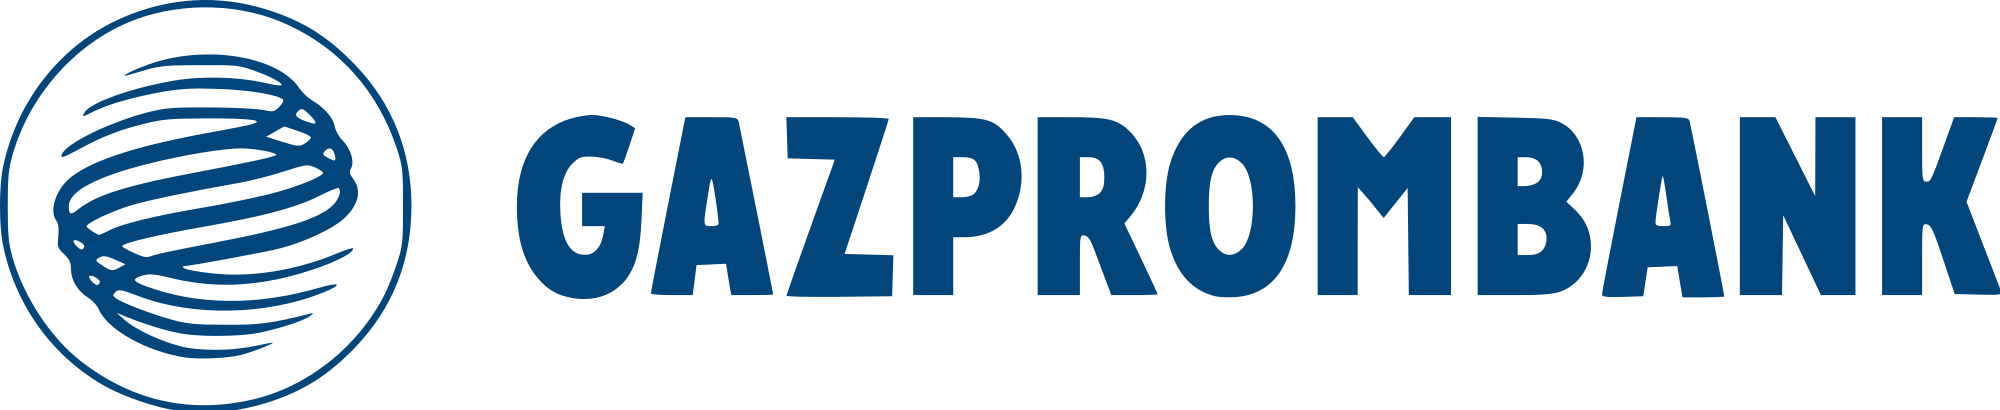 Gazprombank Brand Logo